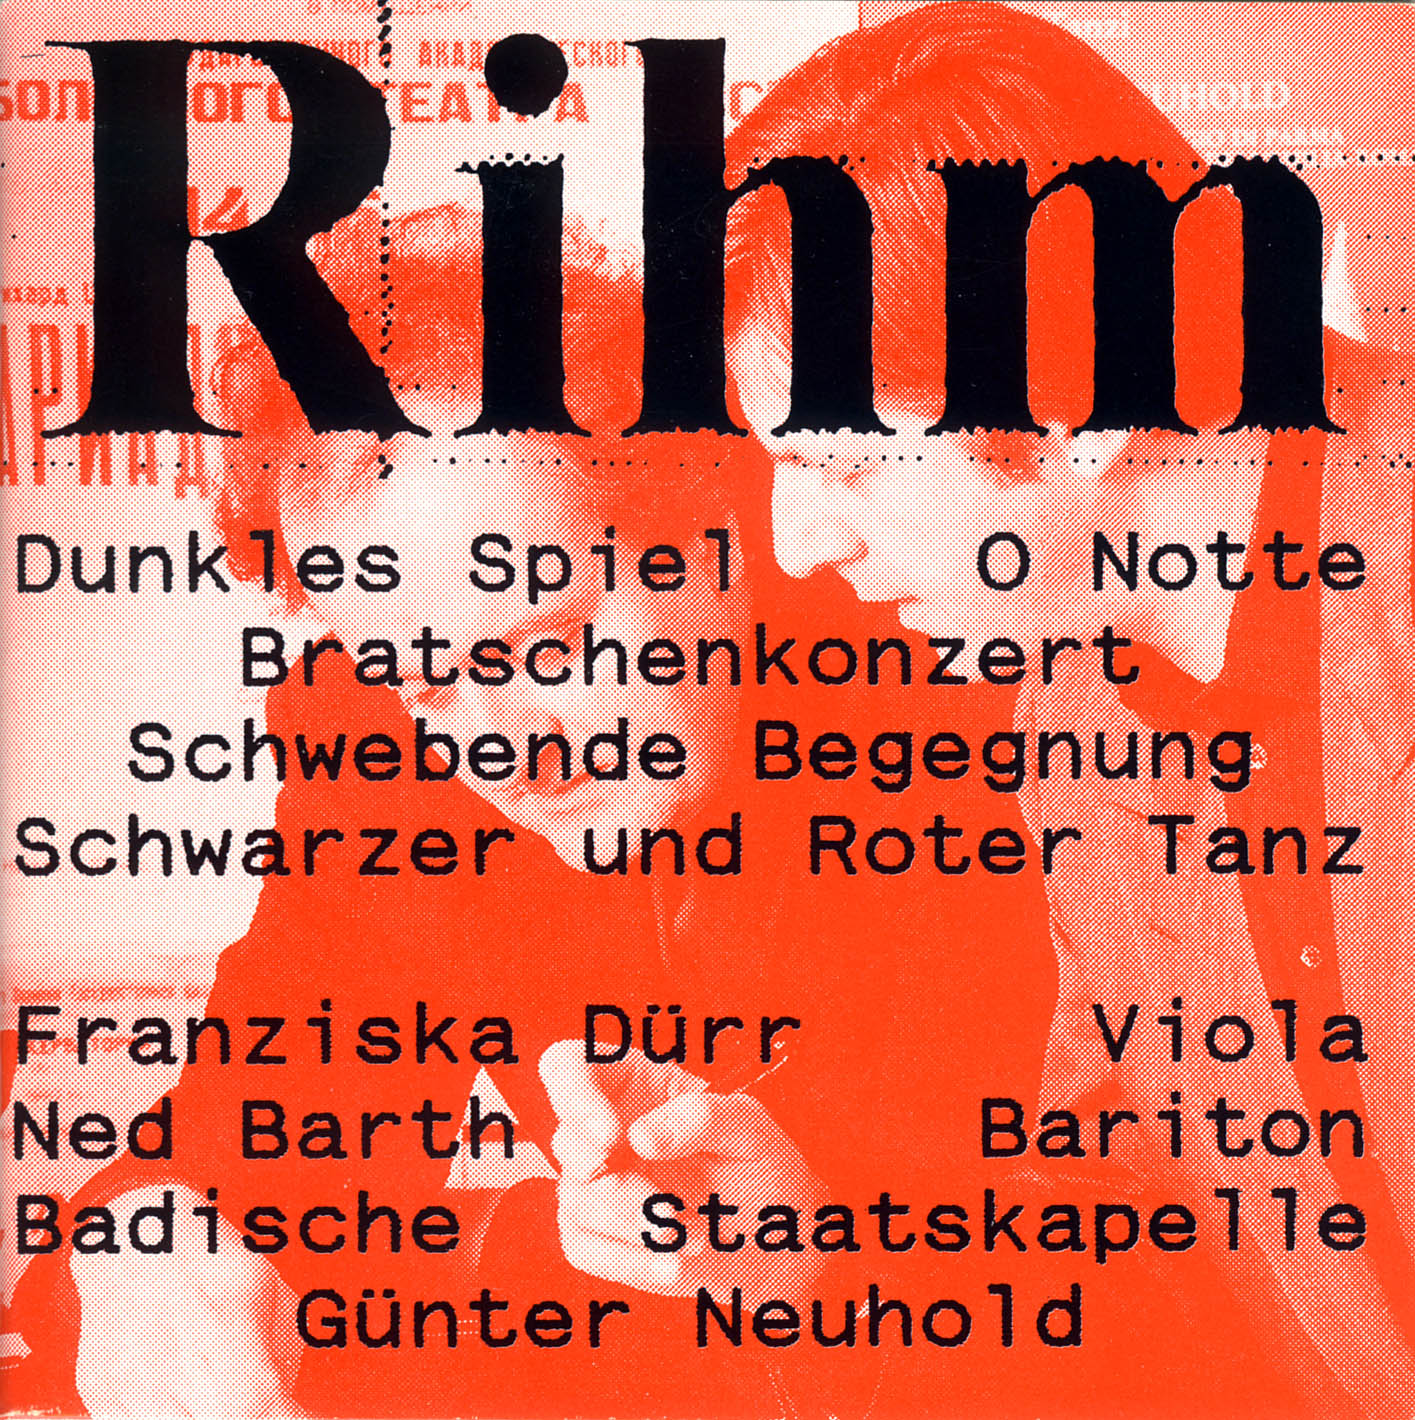 Wolfgang Rihm - Orchesterwerke